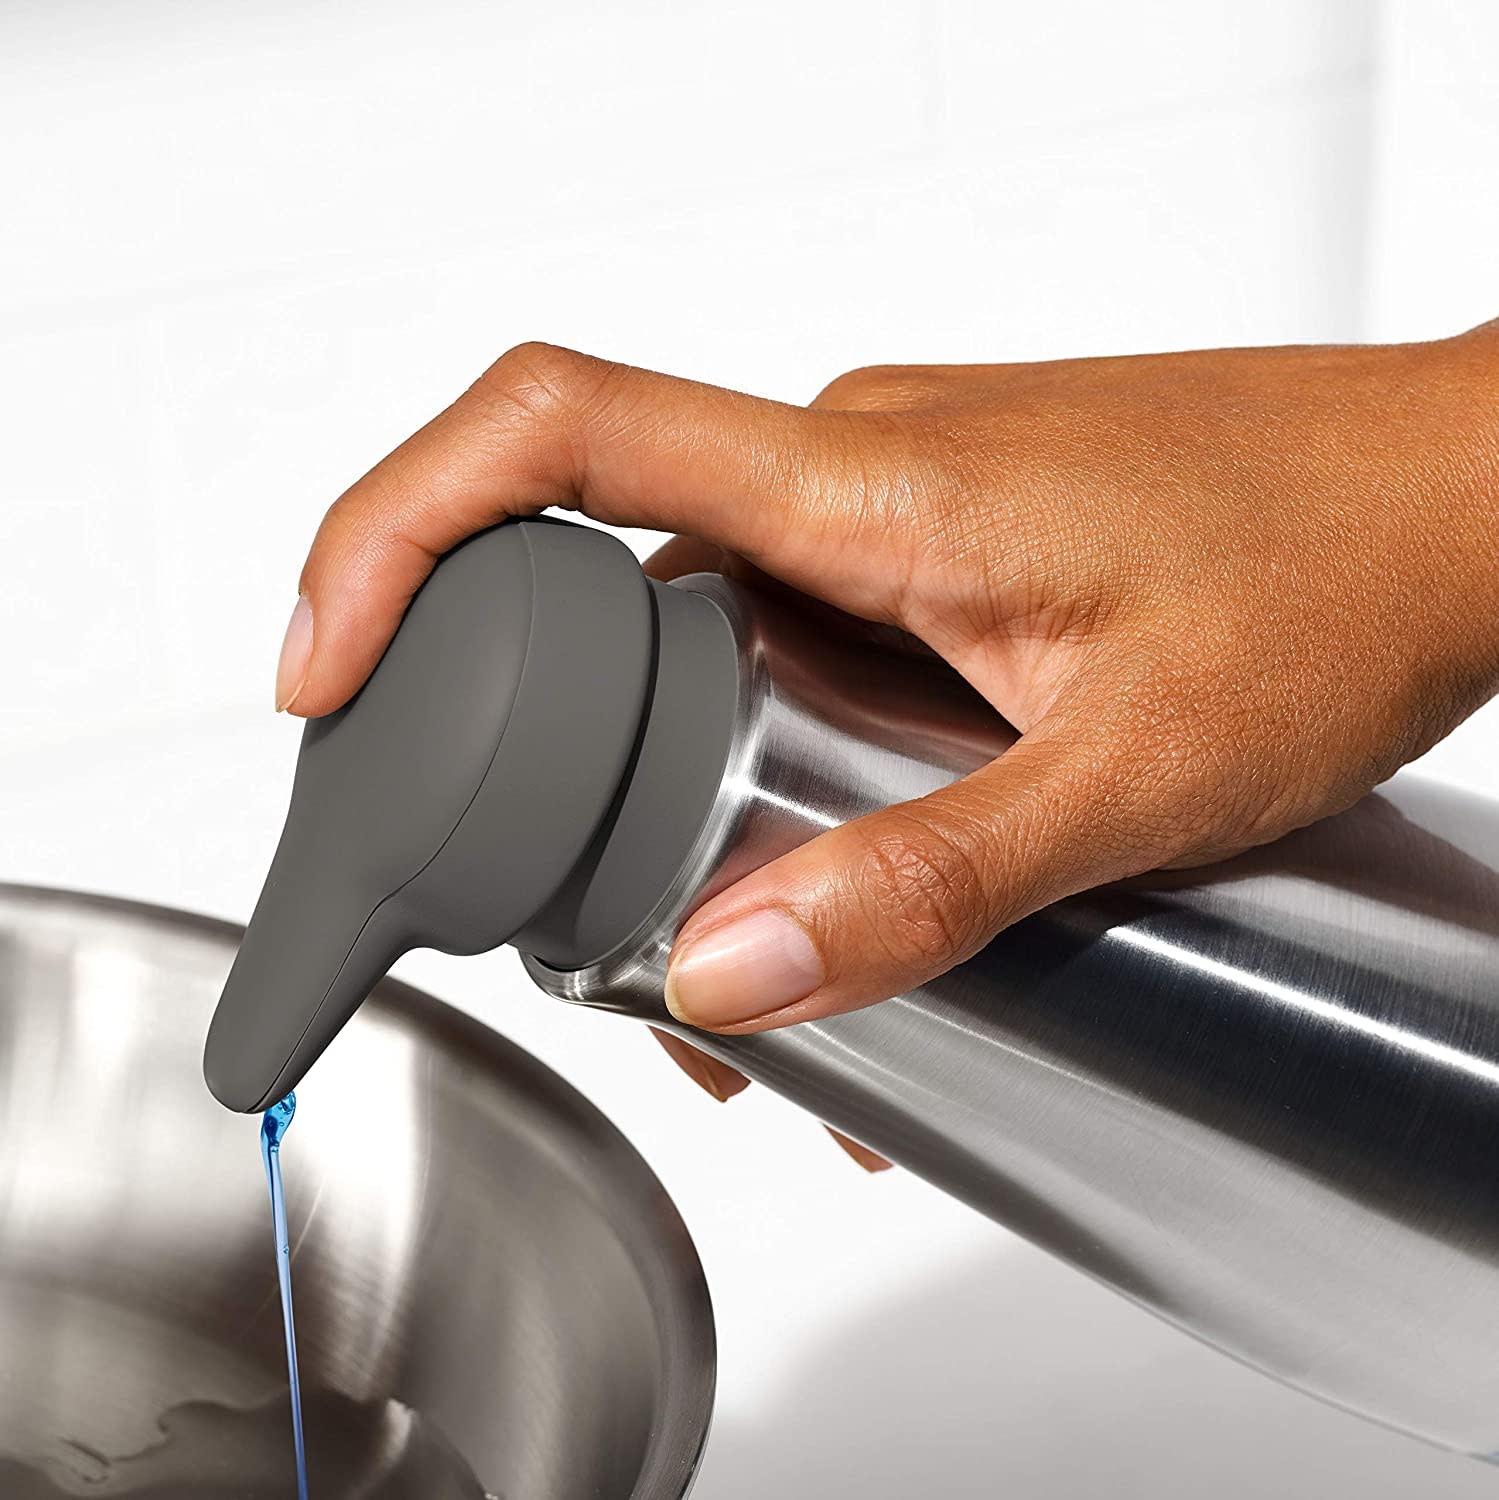 OXO Good Grips Stainless Steel Soap Dispenser - Spoons N Spice